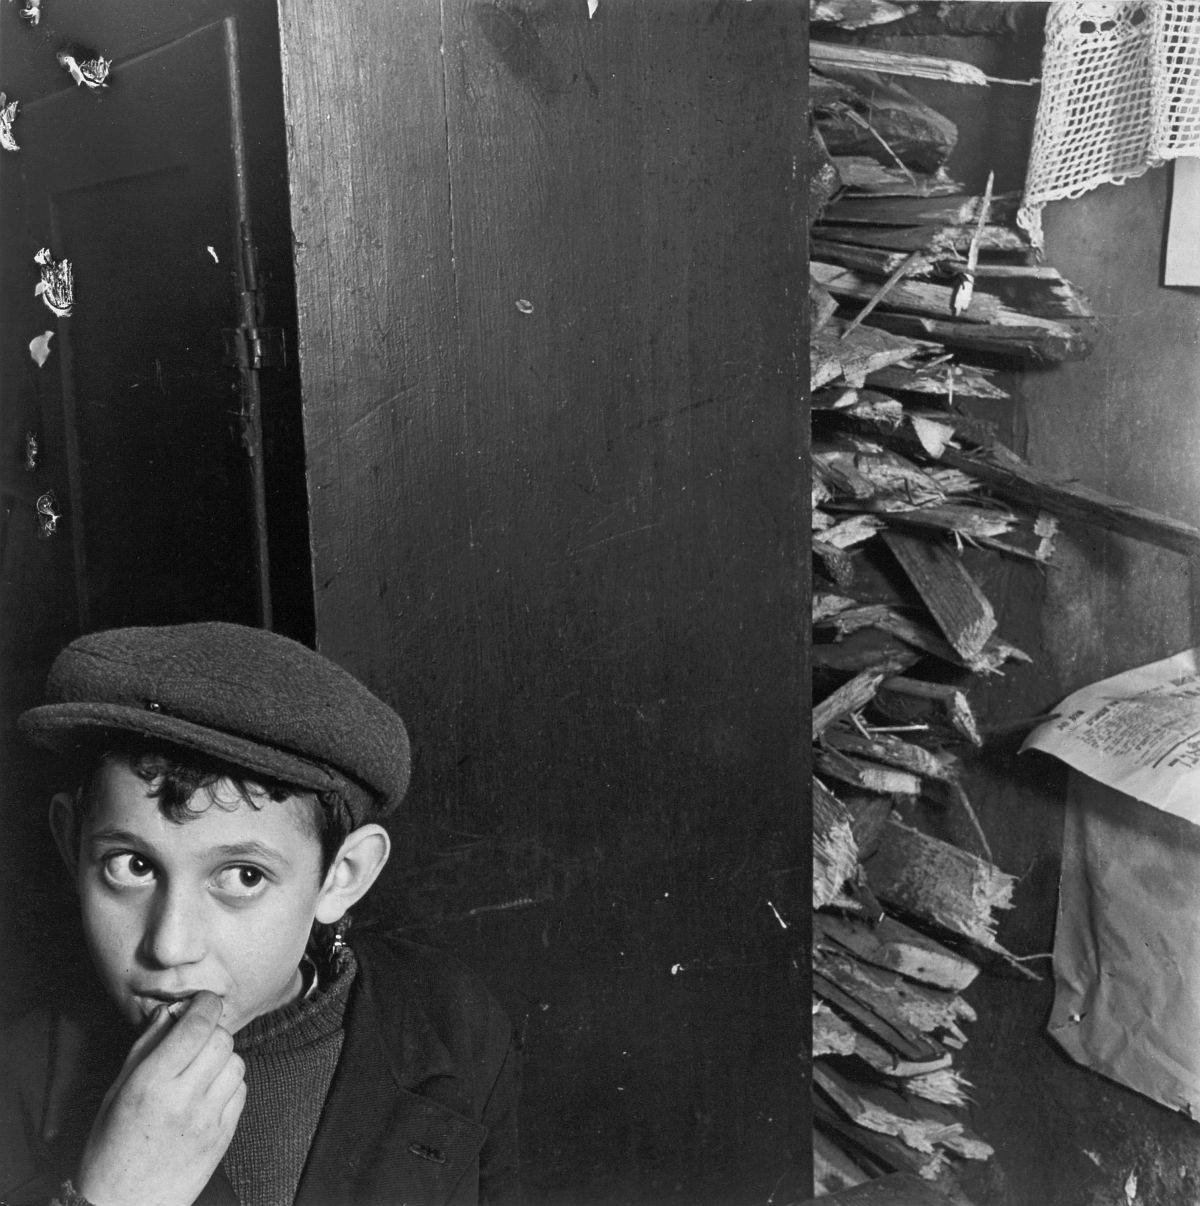 Roman Vishniac, [Boy with kindling in a basement dwelling, Krochmalna Street, Warsaw], ca. 1935–38. Gelatin silver print. © Mara Vishniac Kohn, courtesy International Center of Photography.